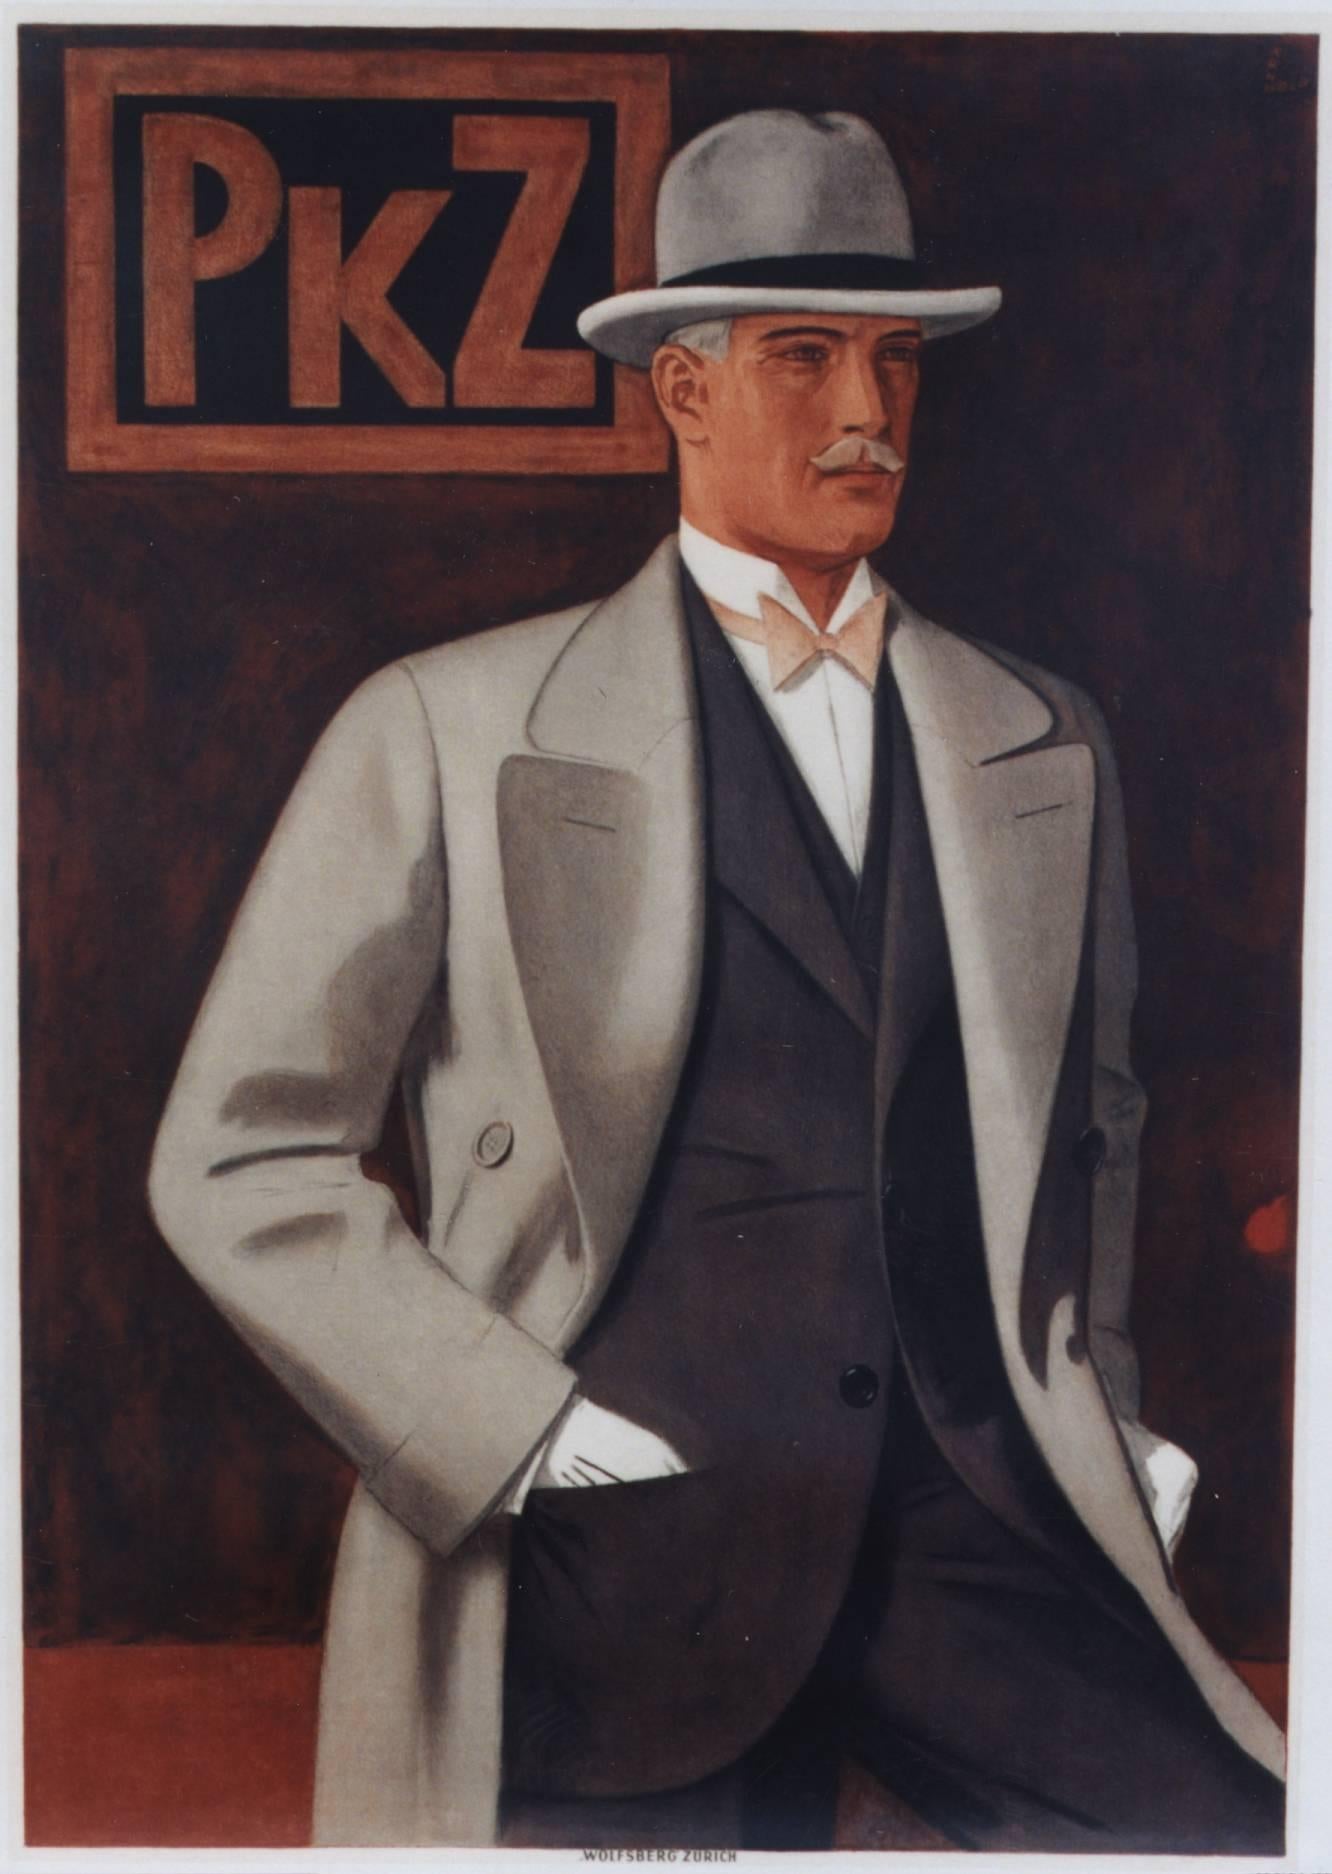 Johann Arnold Figurative Print - PKZ Man with Top Hat